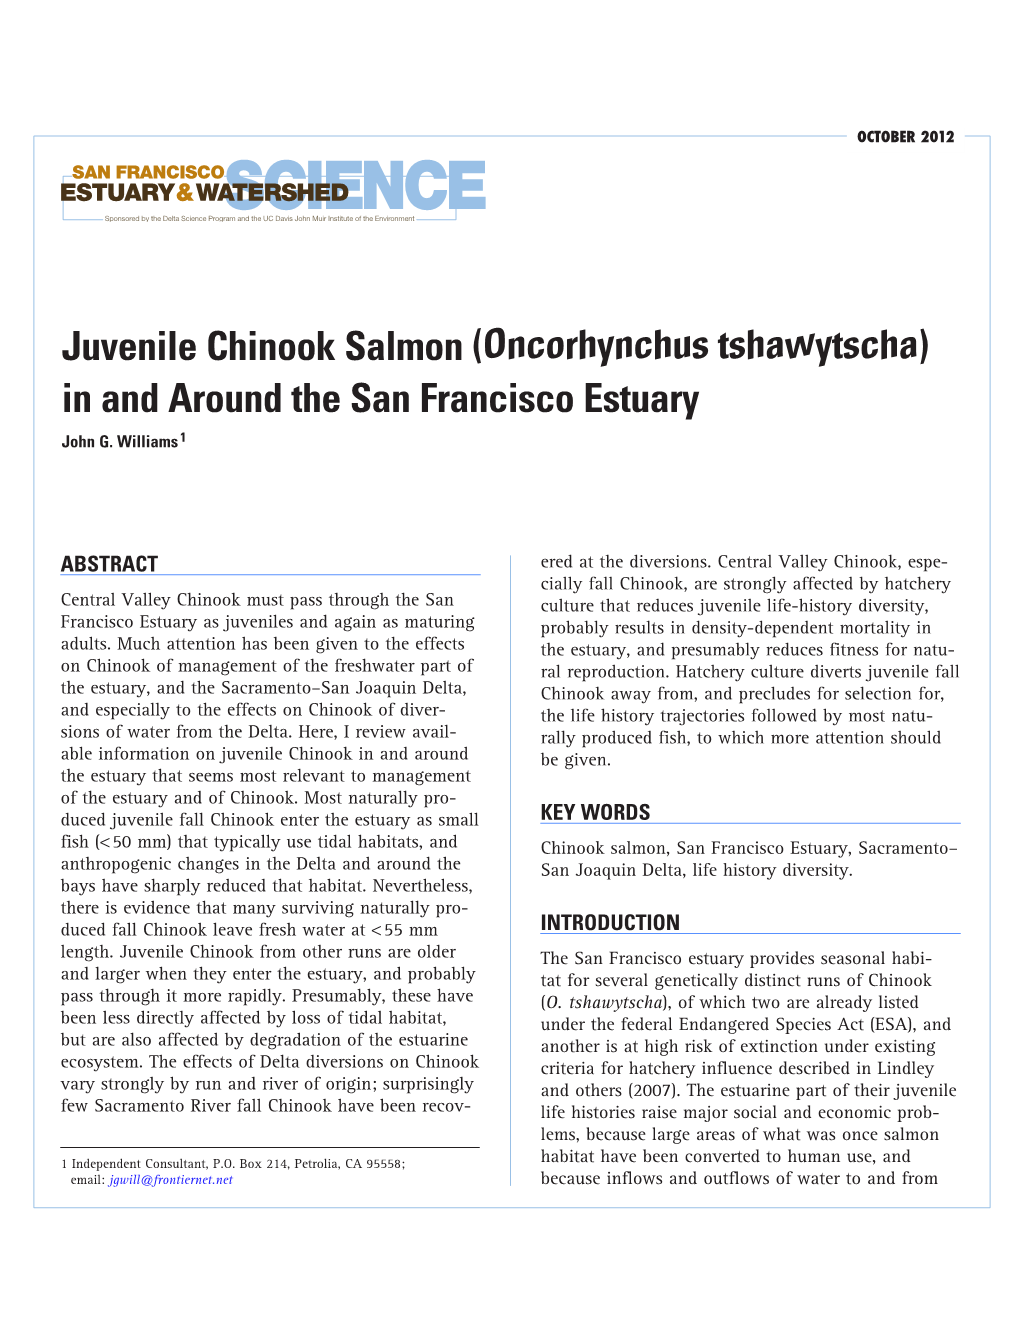 Juvenile Chinook Salmon (Oncorhynchus Tshawytscha) in and Around the San Francisco Estuary John G